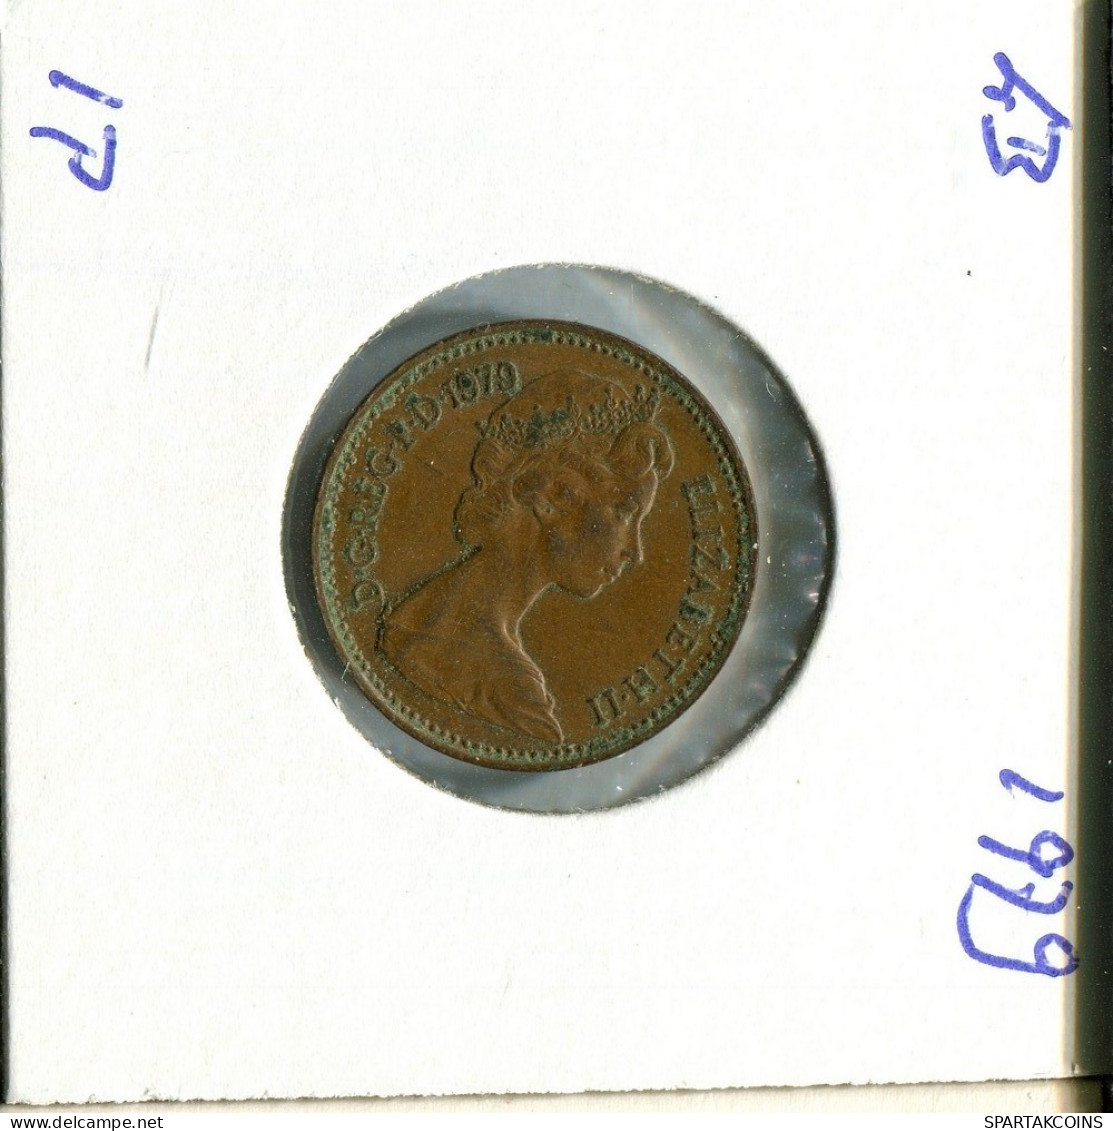 NEW PENNY 1979 UK GROßBRITANNIEN GREAT BRITAIN Münze #AU806.D.A - 1 Penny & 1 New Penny